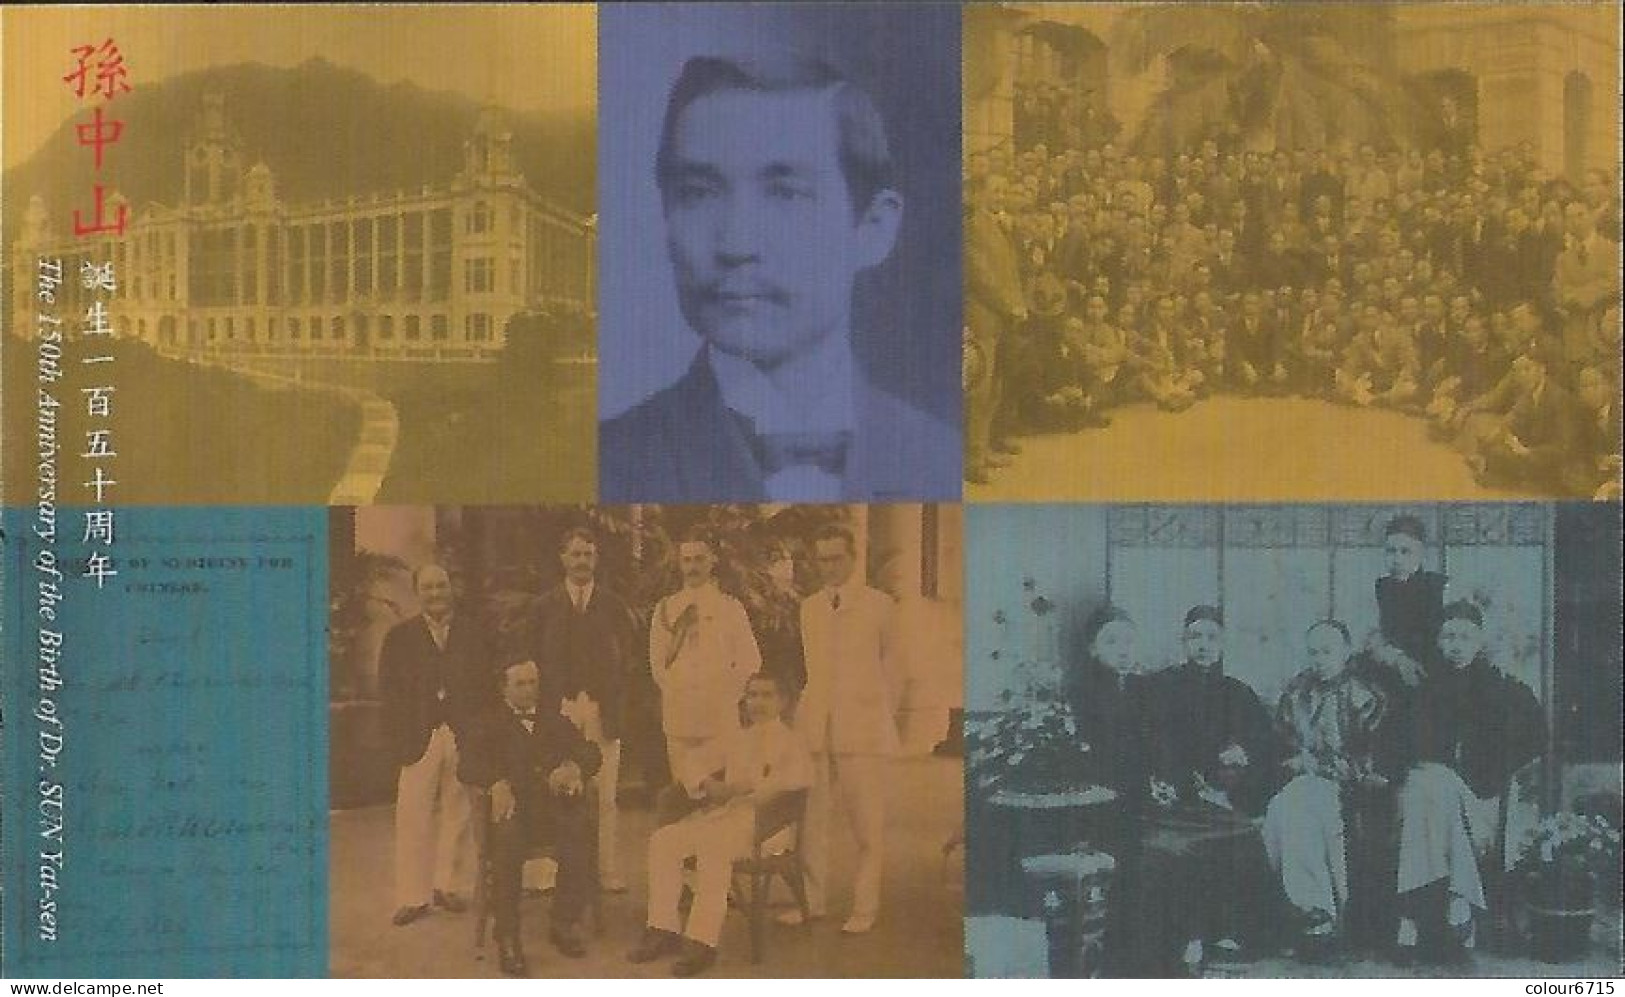 China Hong Kong 2016 The 150th Anniversary Of The Birth Of Sun Yat-sen Prestige Booklet MNH - Ongebruikt